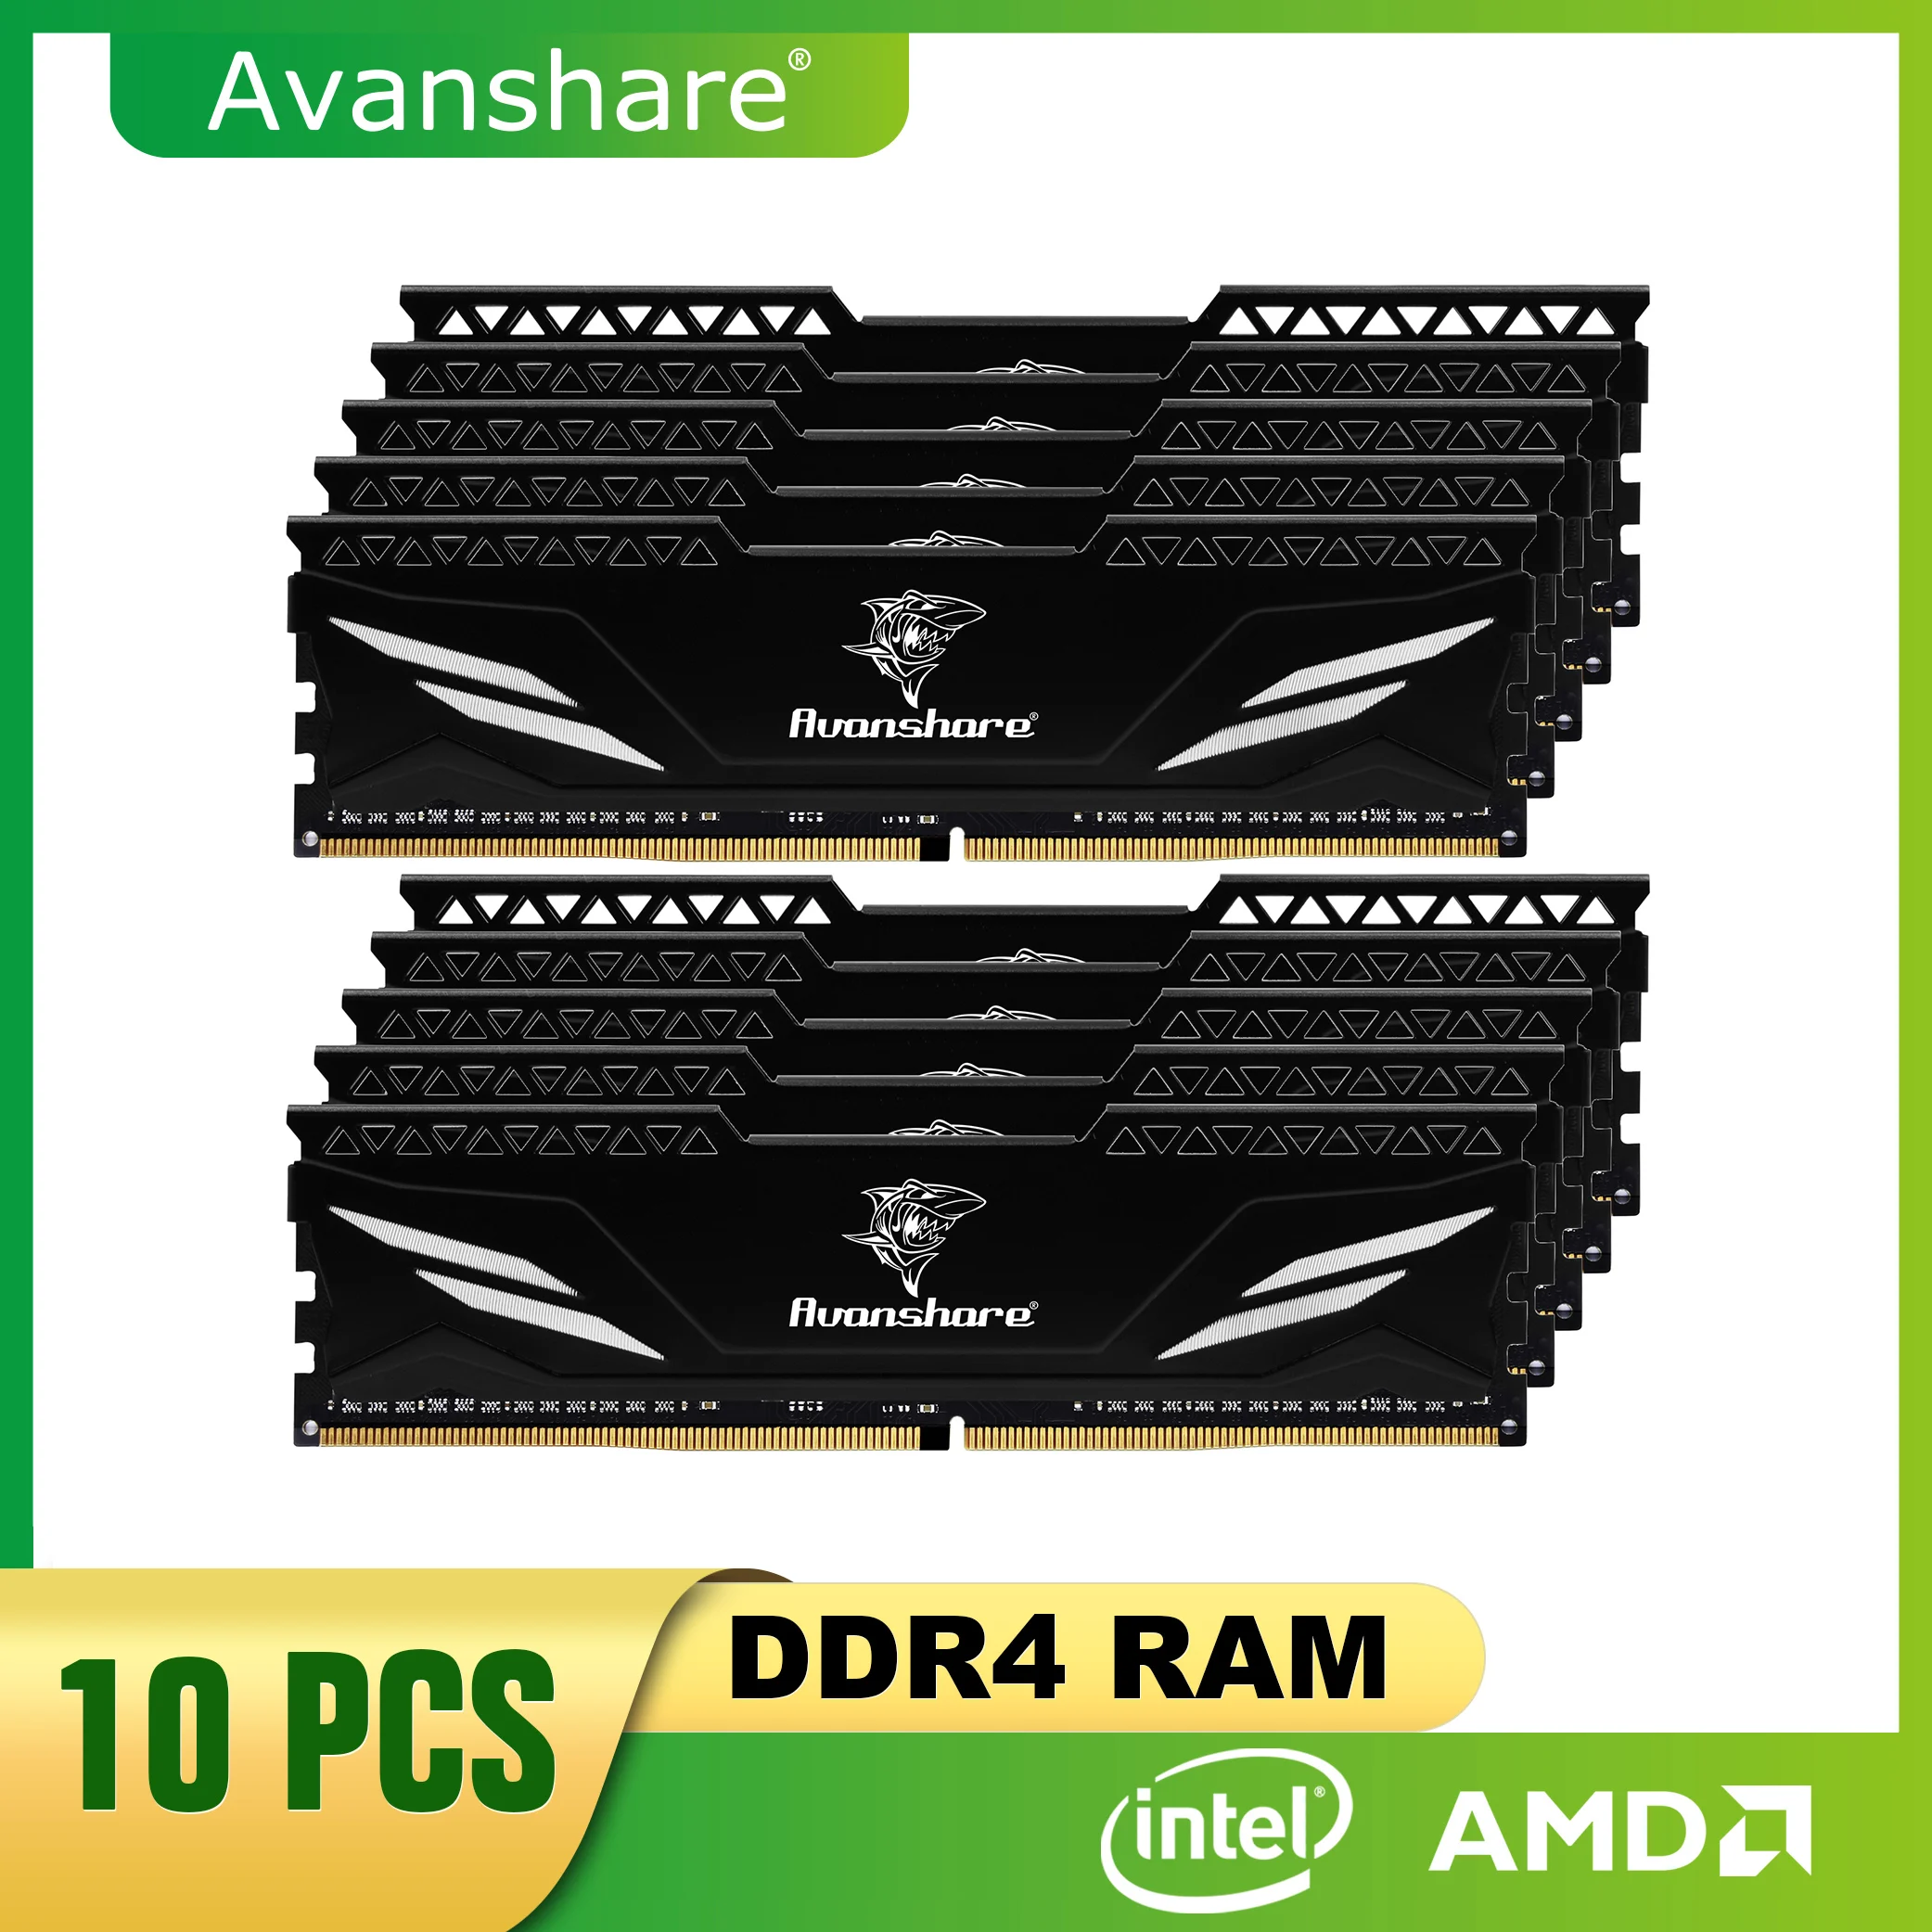 Avanshare 10Pcs 5Pcs Ram Memory DDR4 4GB 8GB 2666MHz 2400MHz With Heat Sink PC4 21300 DIMM